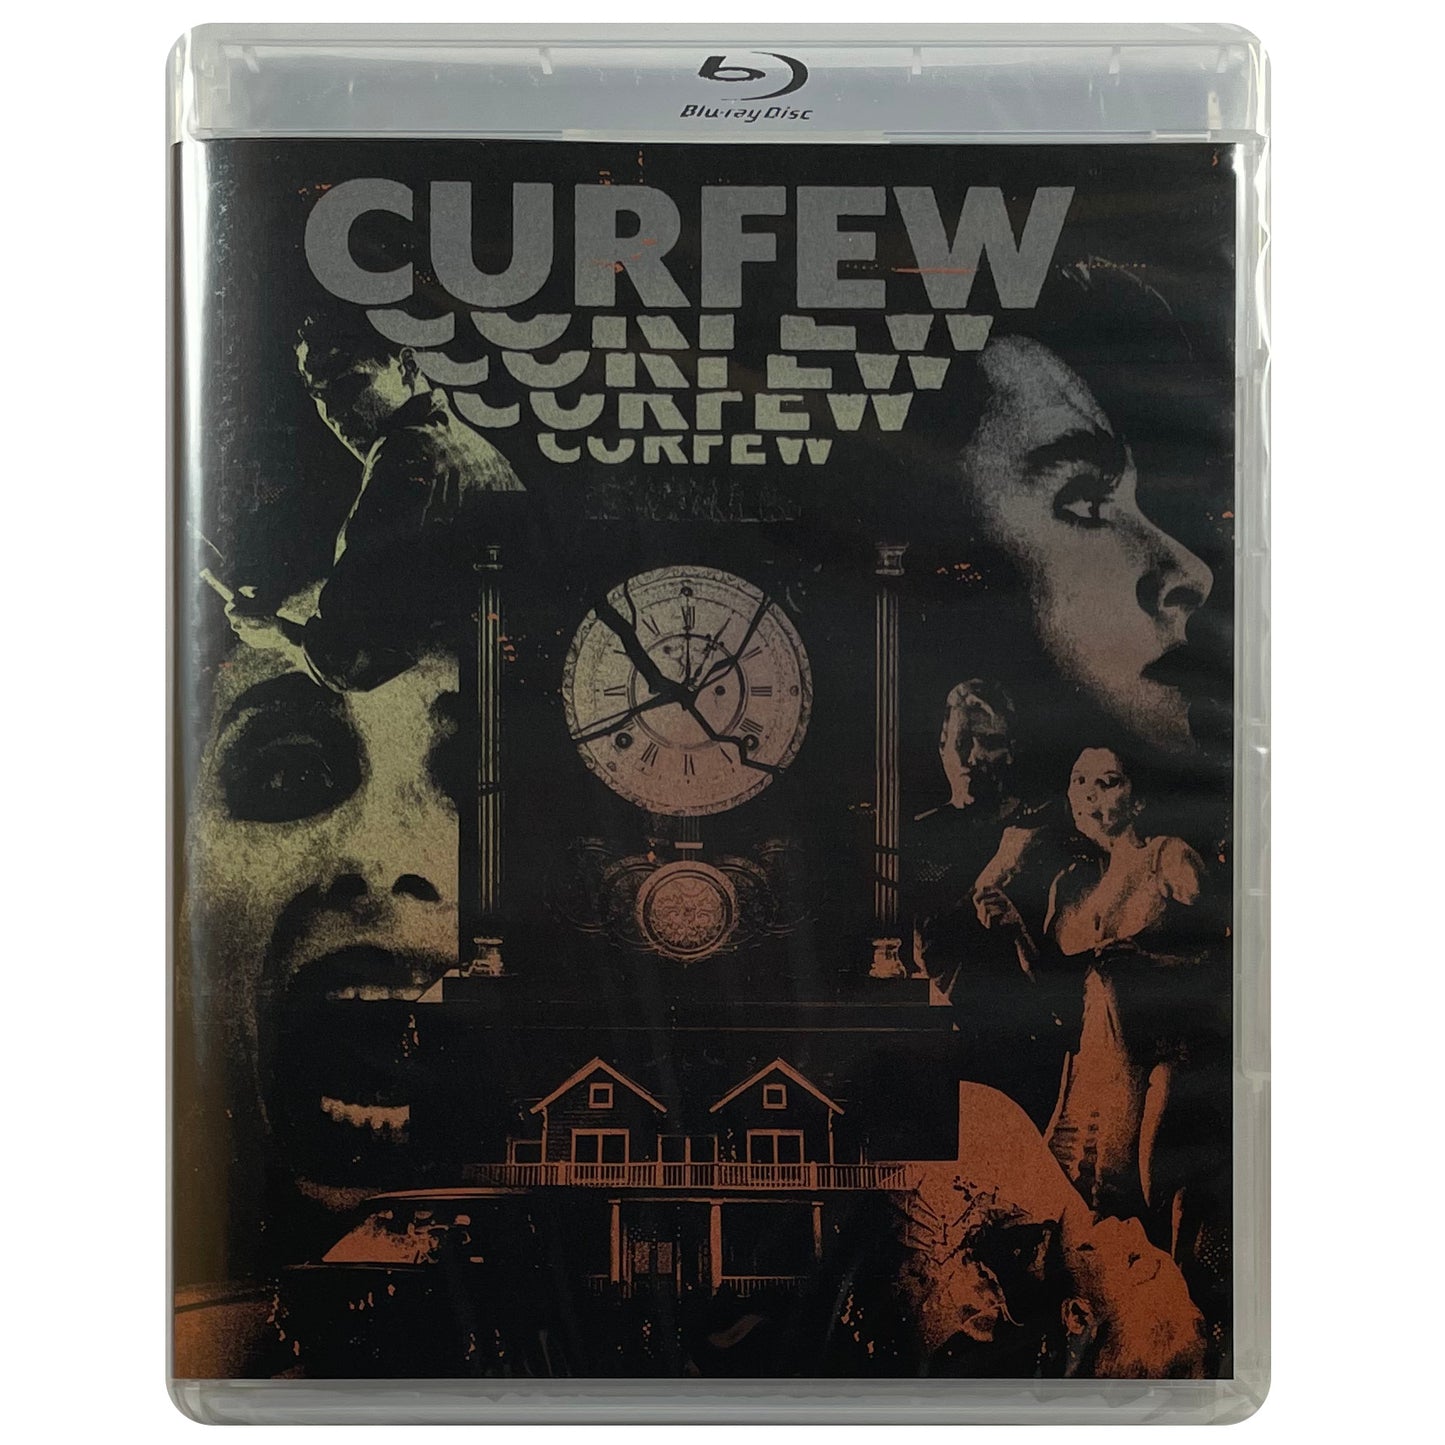 Curfew Blu-Ray